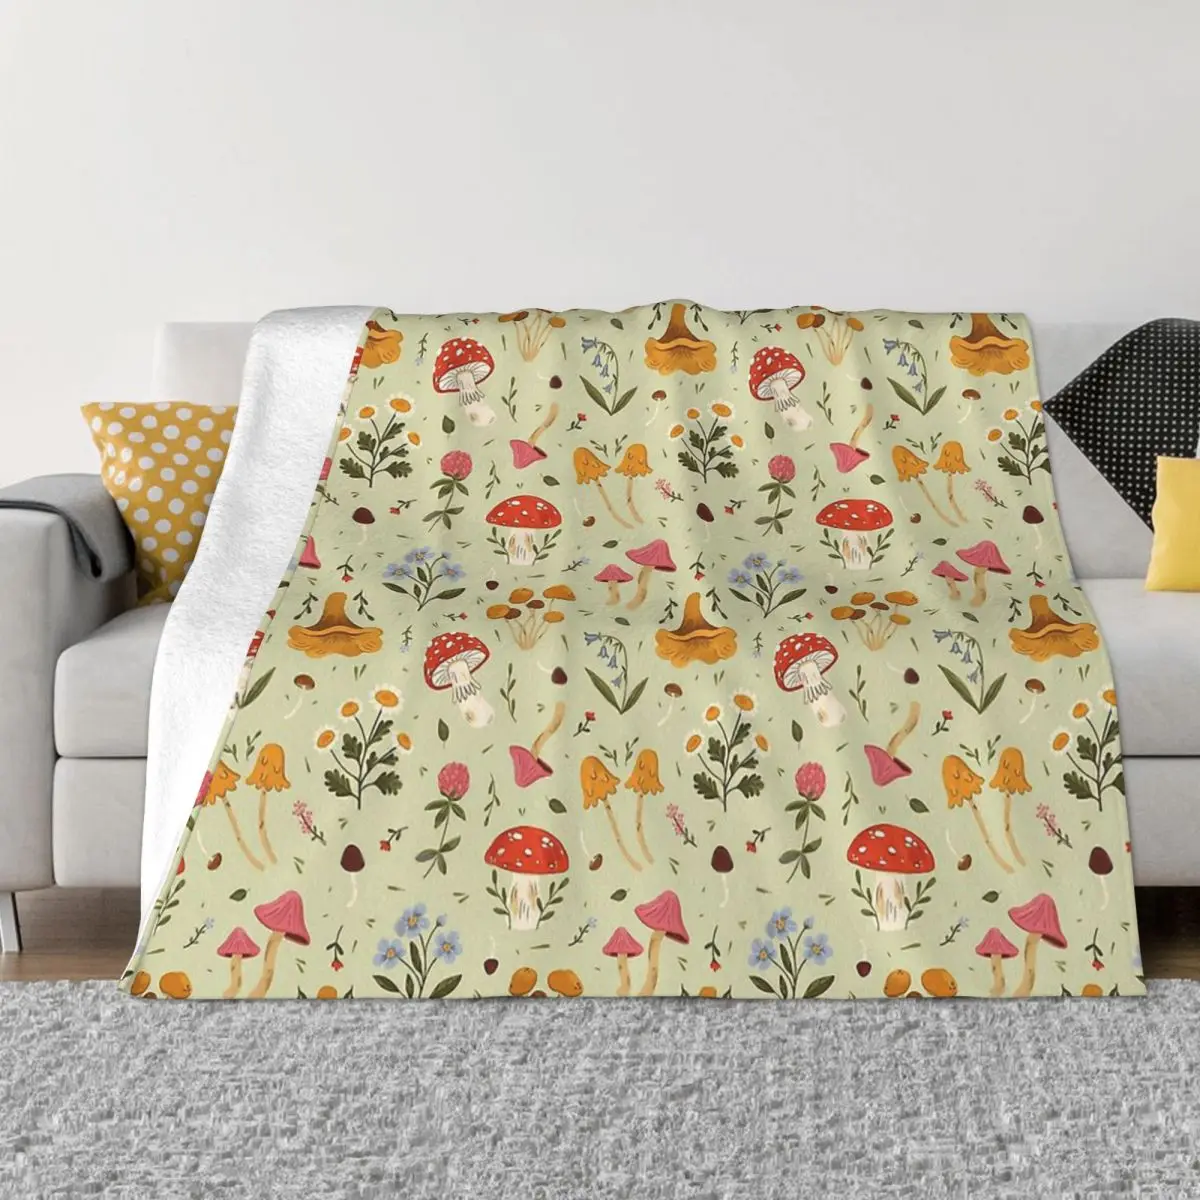 

Mushroom Mushrooms Forest Blankets Coral Fleece Plush Decoration Bedroom Bedding Couch Bedspread